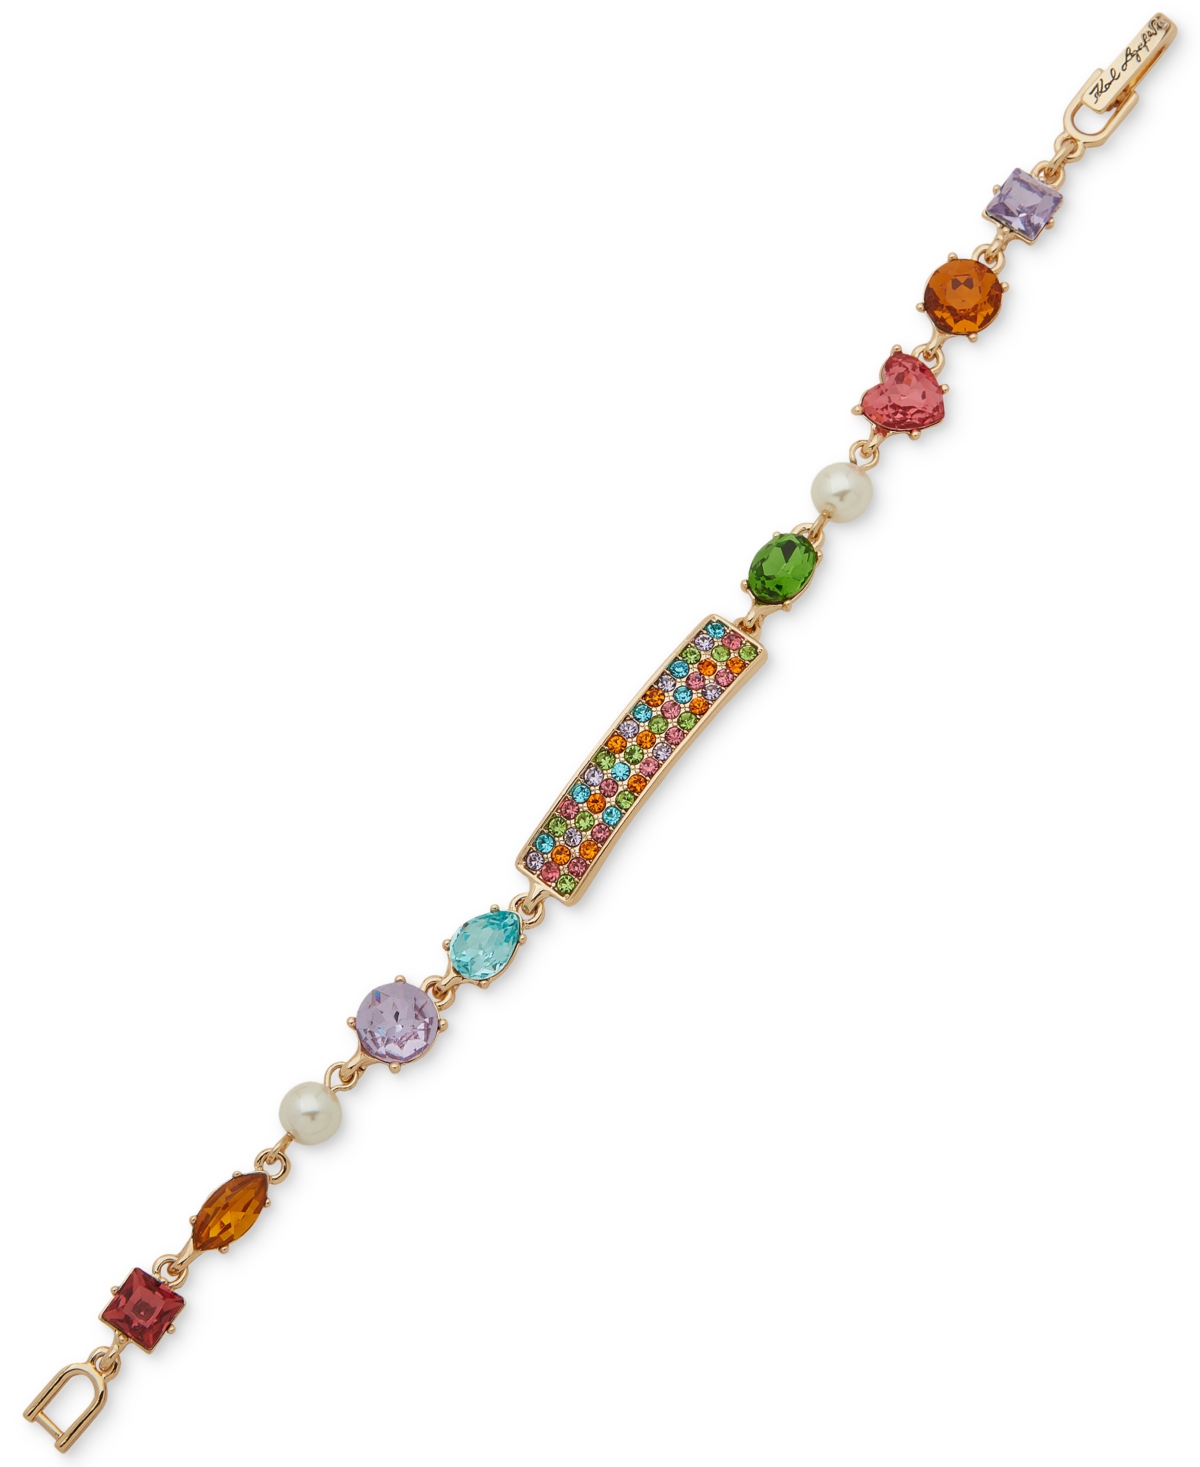 Gold-Tone Multicolor Mixed Crystal & Imitation Pearl Flex Bracelet - Multi